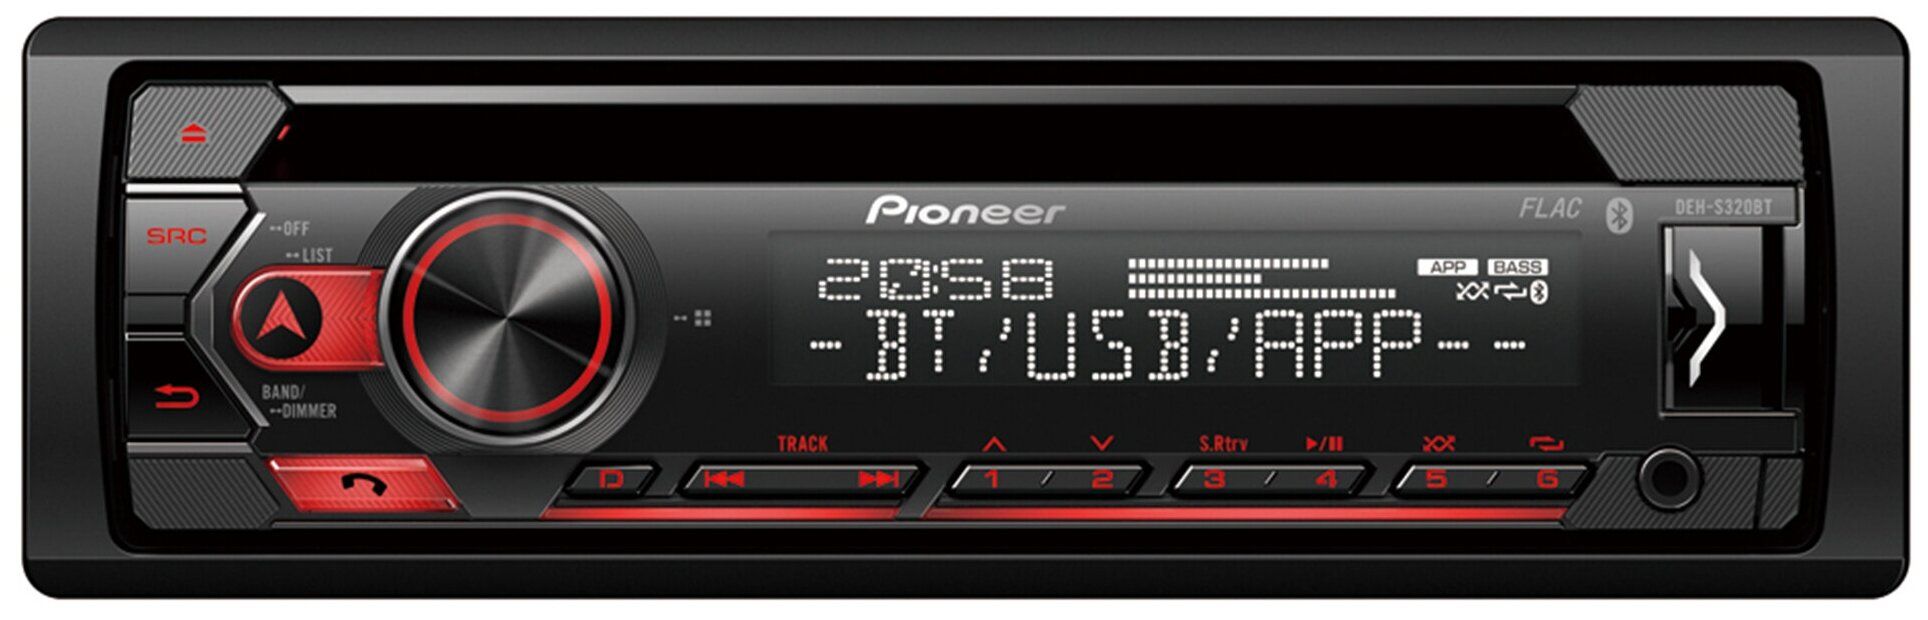 Автомагнитола pioneer отзыв. Deh-s420bt. Pioneer USB Flash. Автомагнитола Пионер все модели фото и цены.